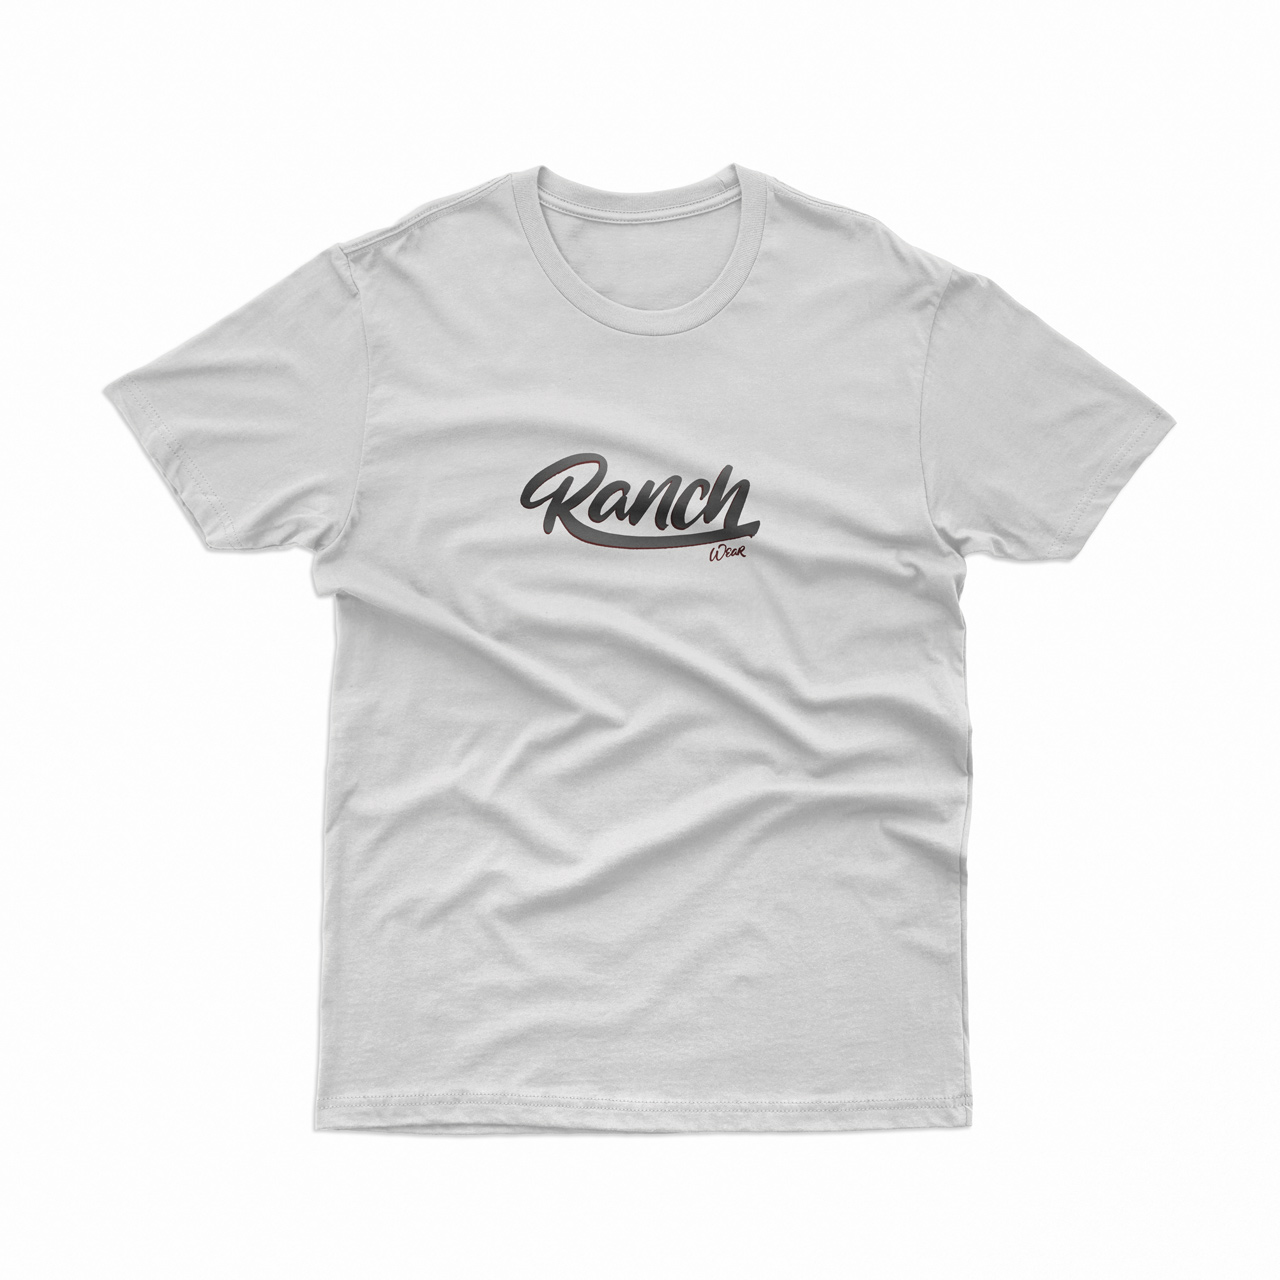 Camiseta Infantil Ranch Wear CIRW02 Mescla